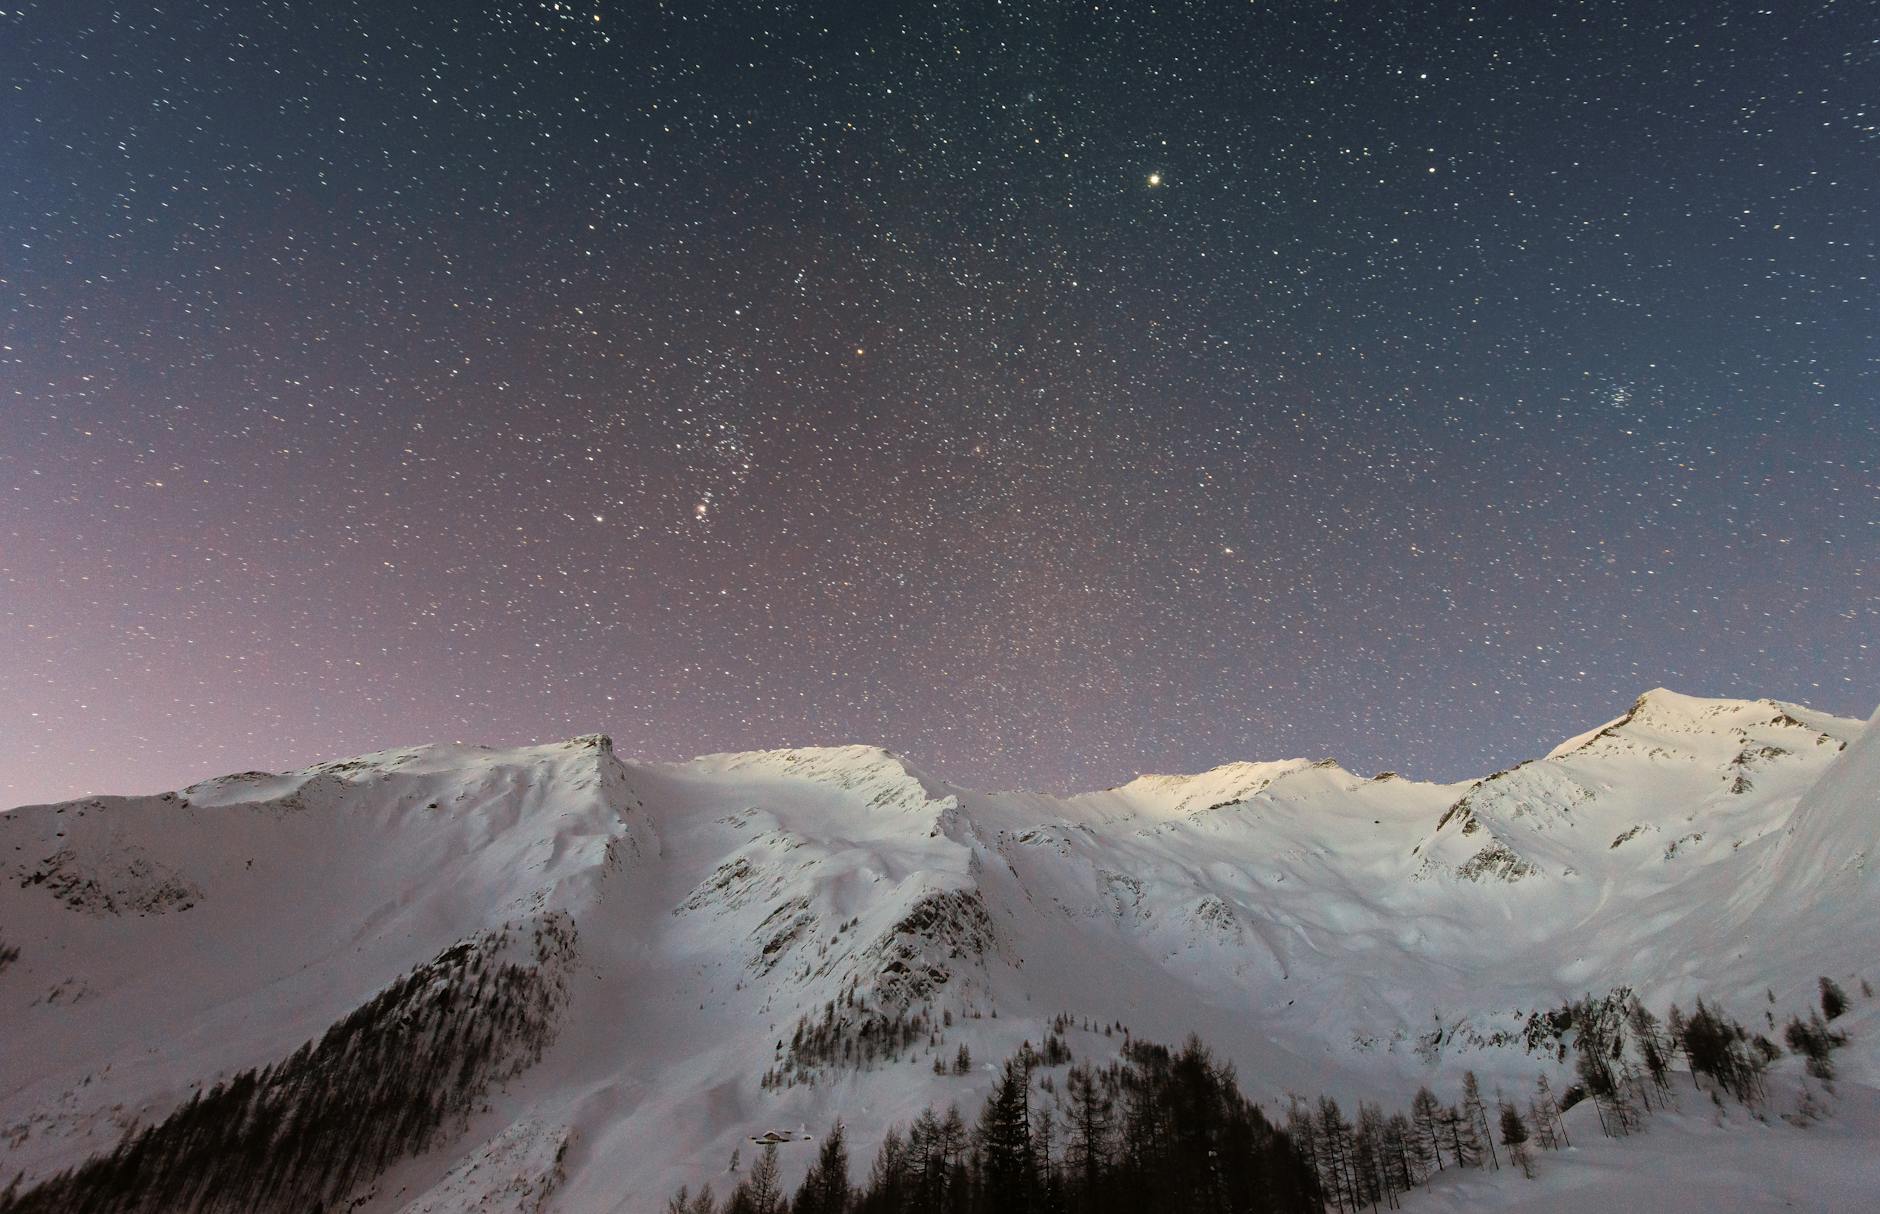 a snowy mountain range with stars overhead